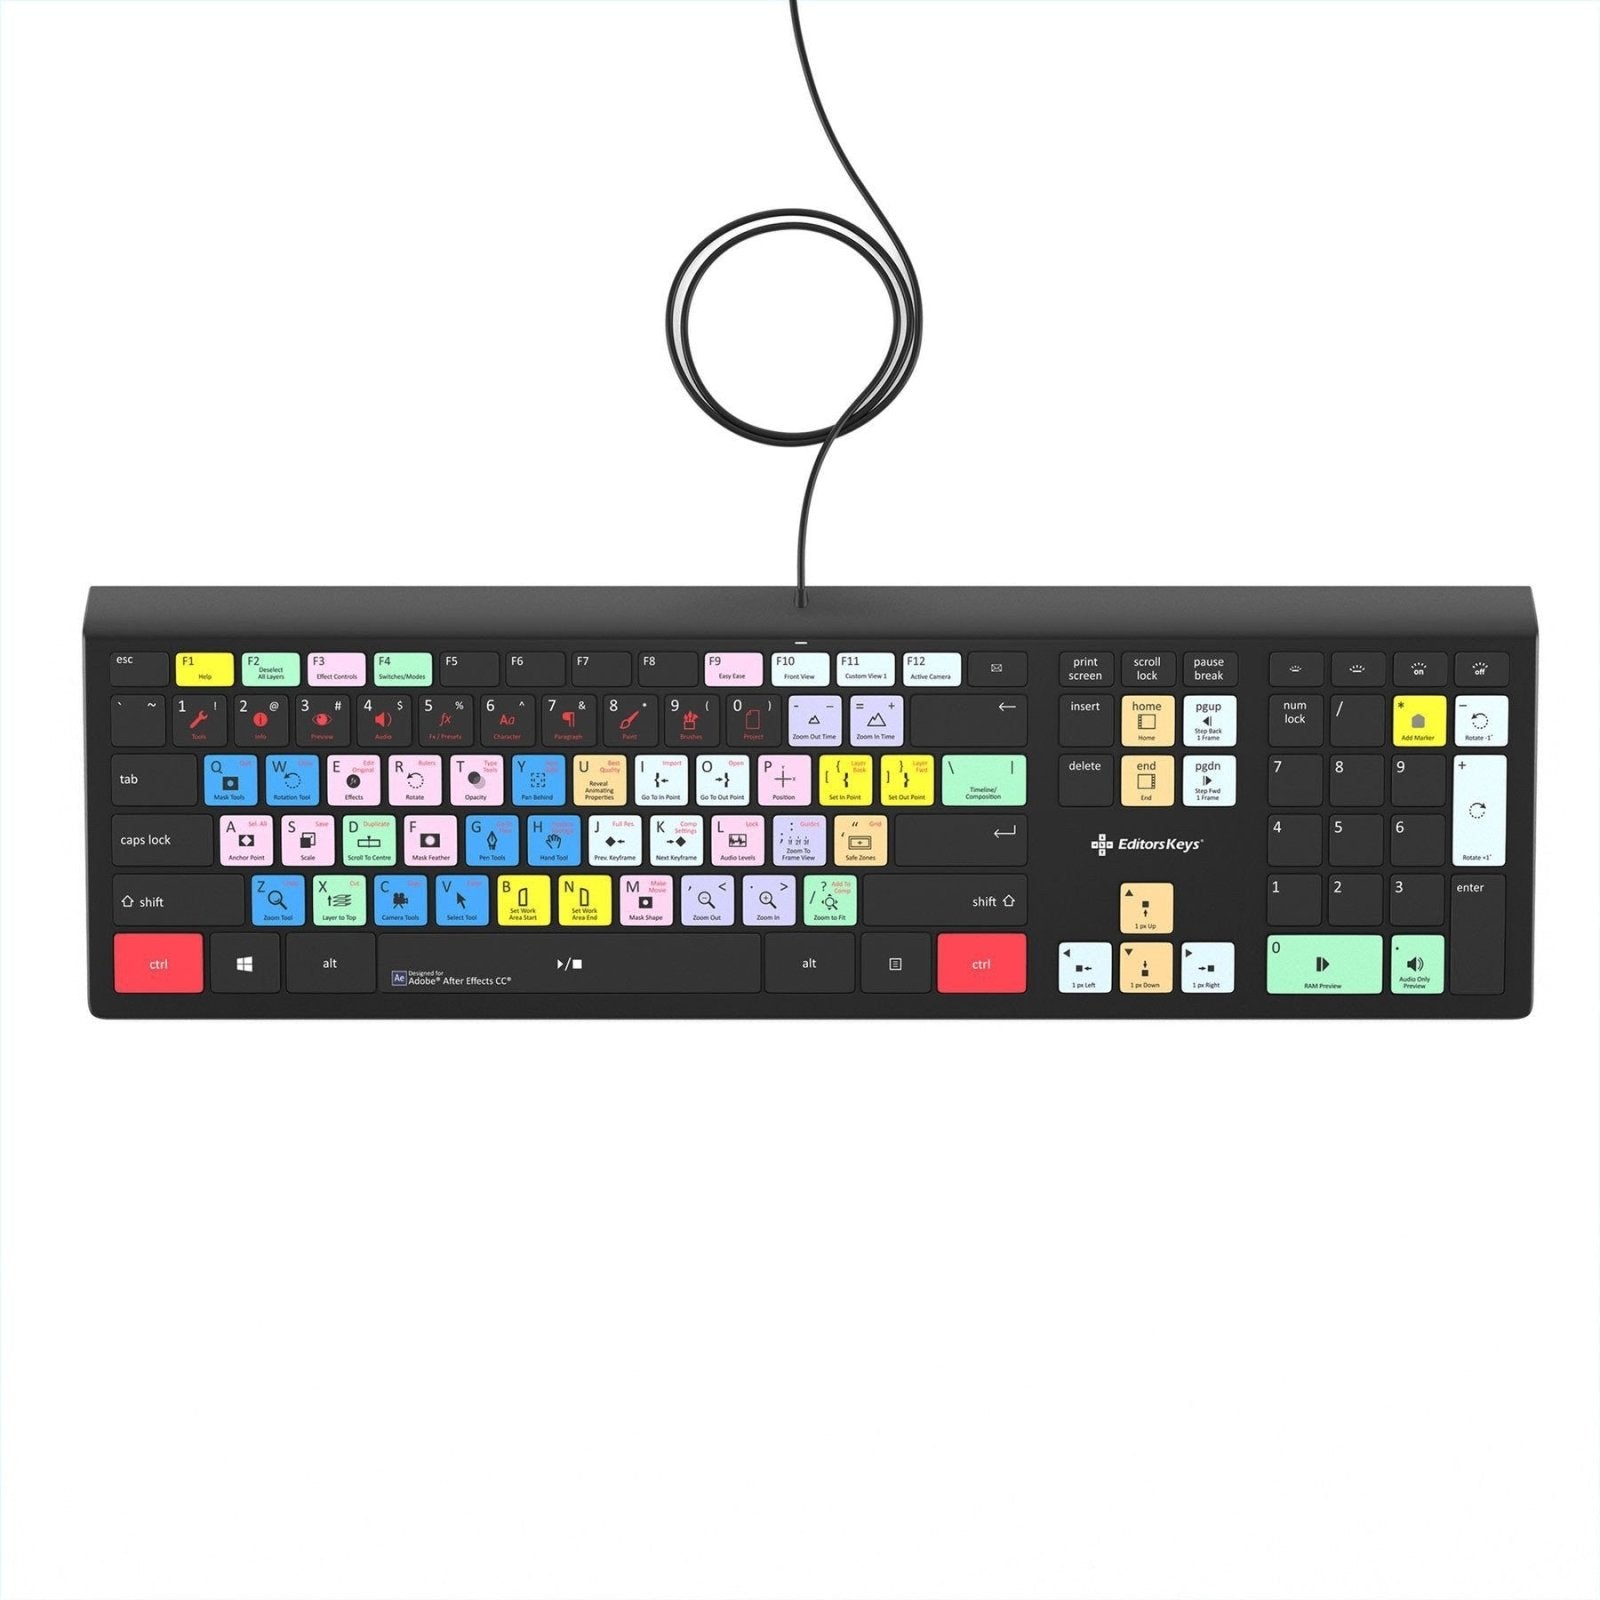 Adobe After Effects Keyboard - Backlit - For Mac or PC - Editors Keys